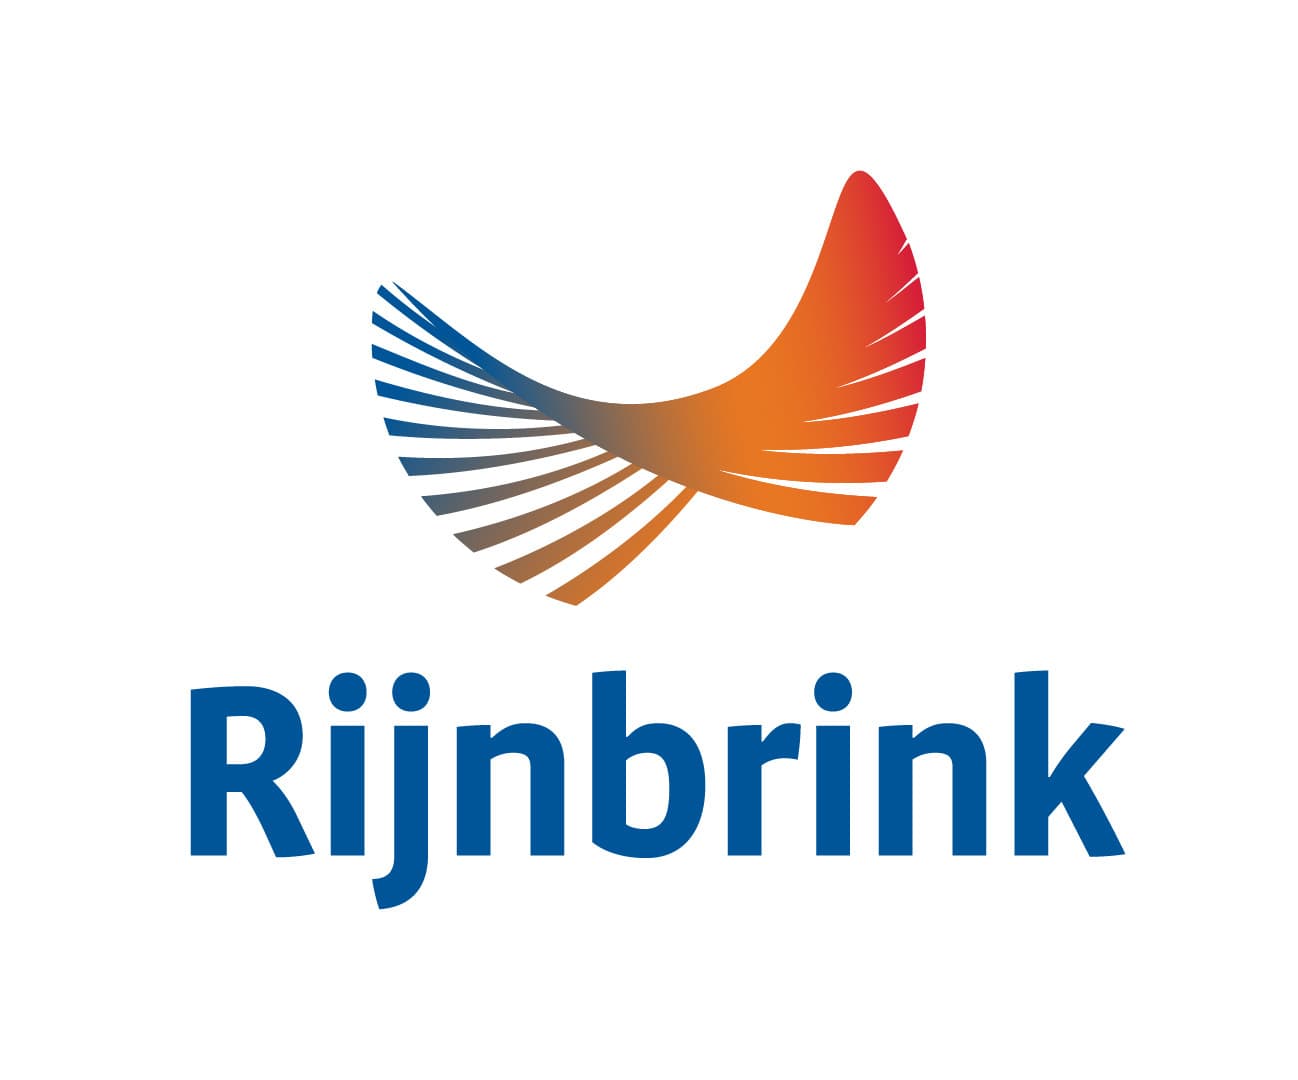 Rijnbrink logo 01 RGB 1